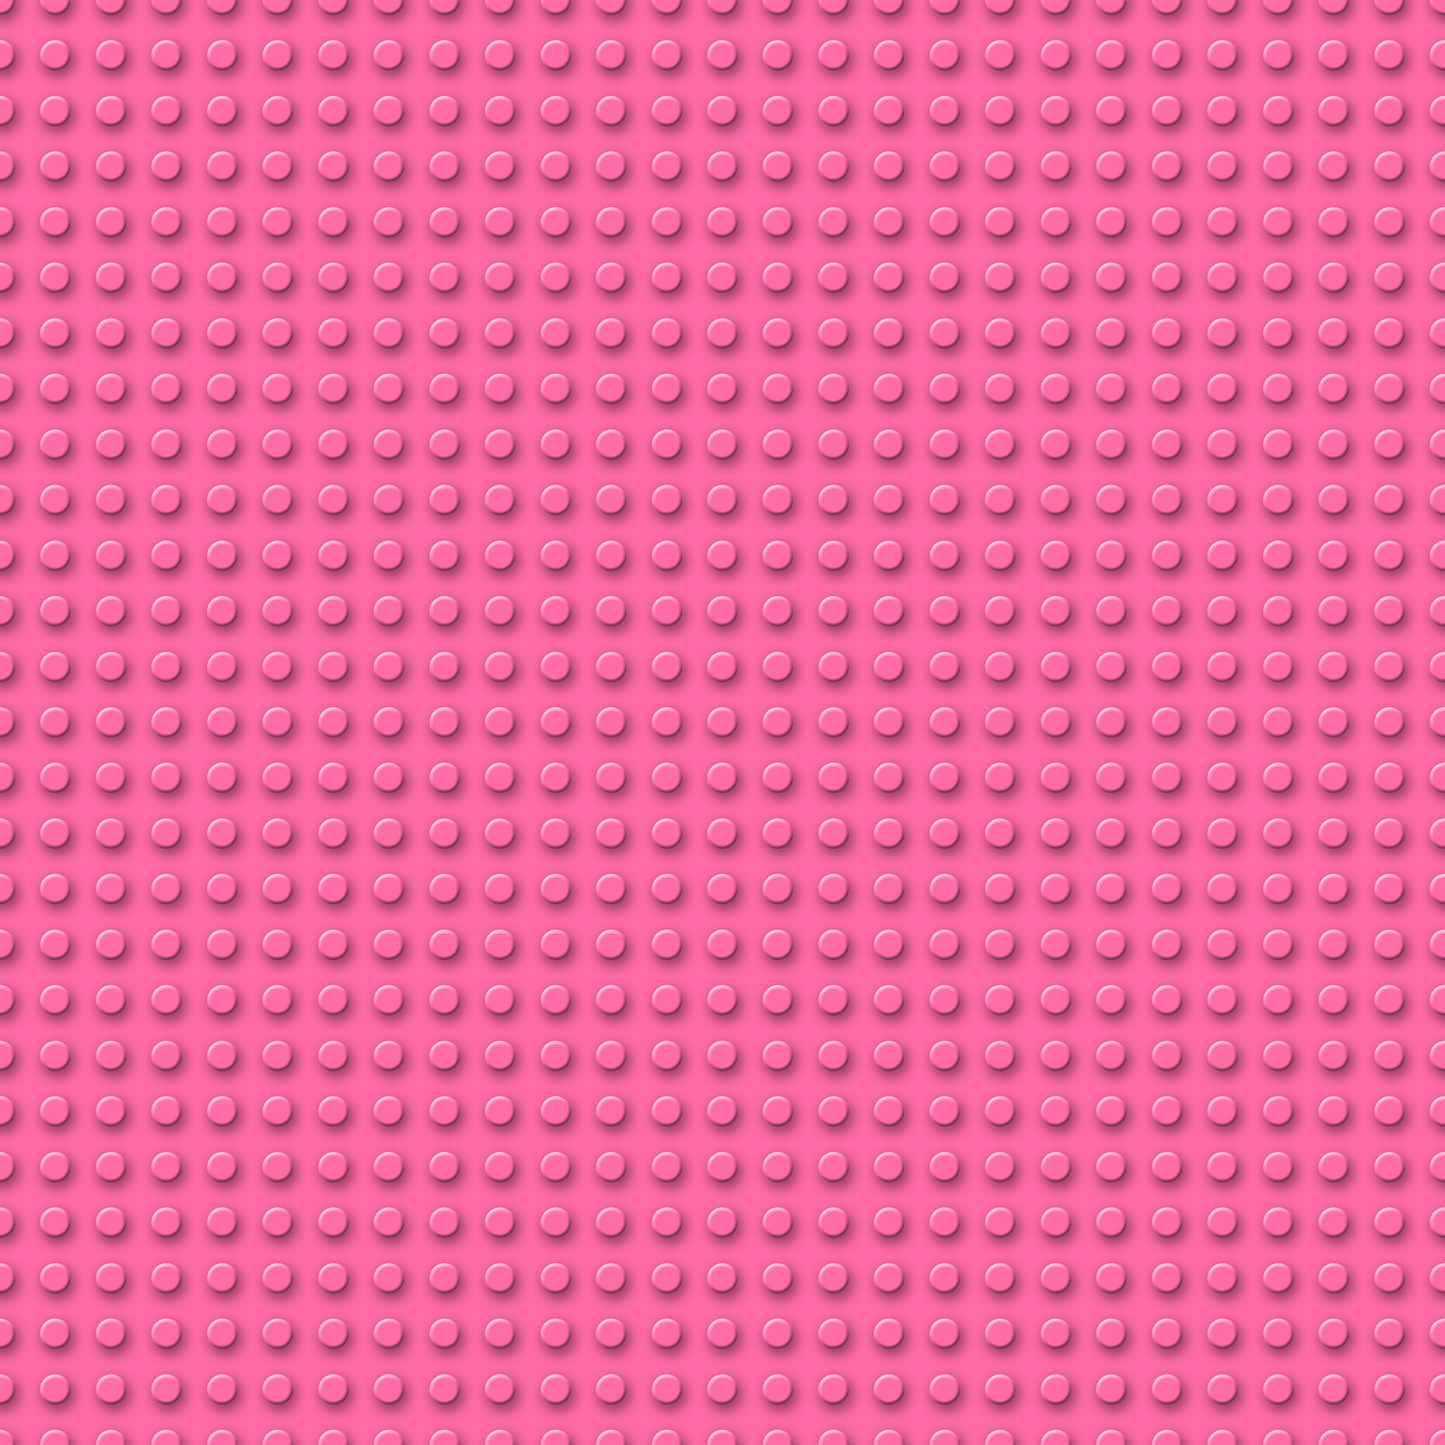 Building Blocks - Pink - 009